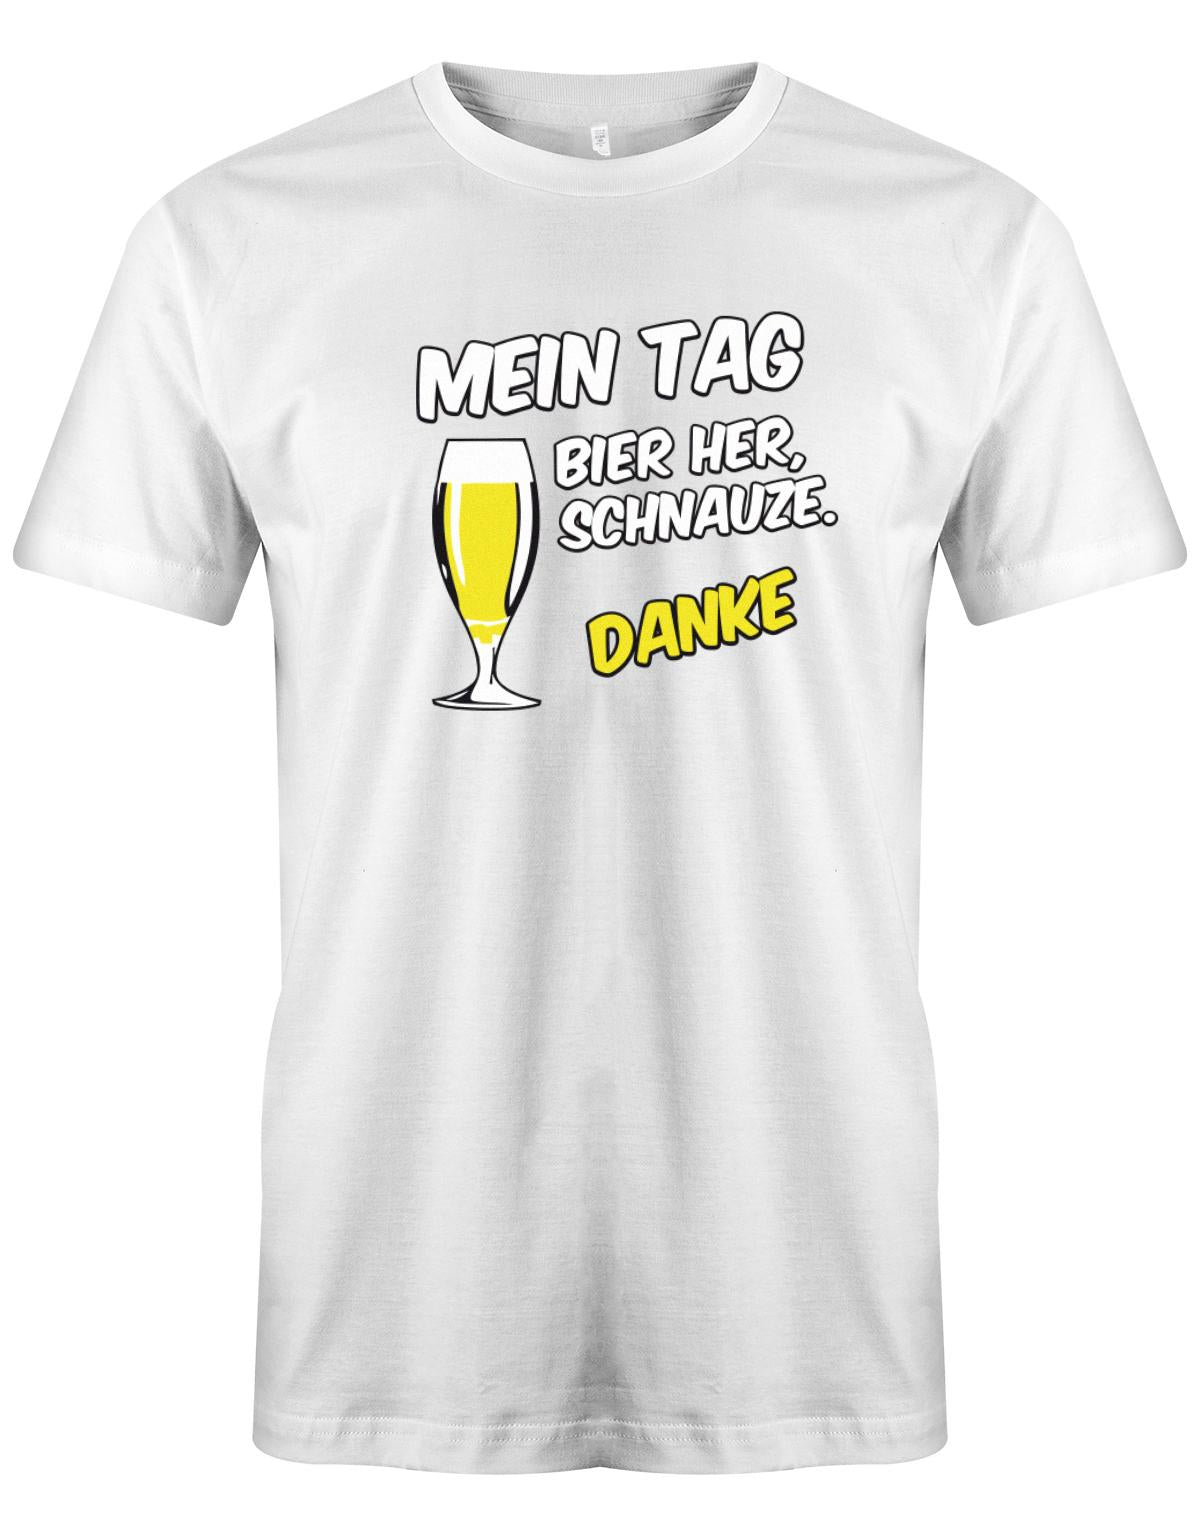 Mein-Tag-Bier-Her-Schnauze-Danke-Vatertag-Herren-Shirt-Weiss